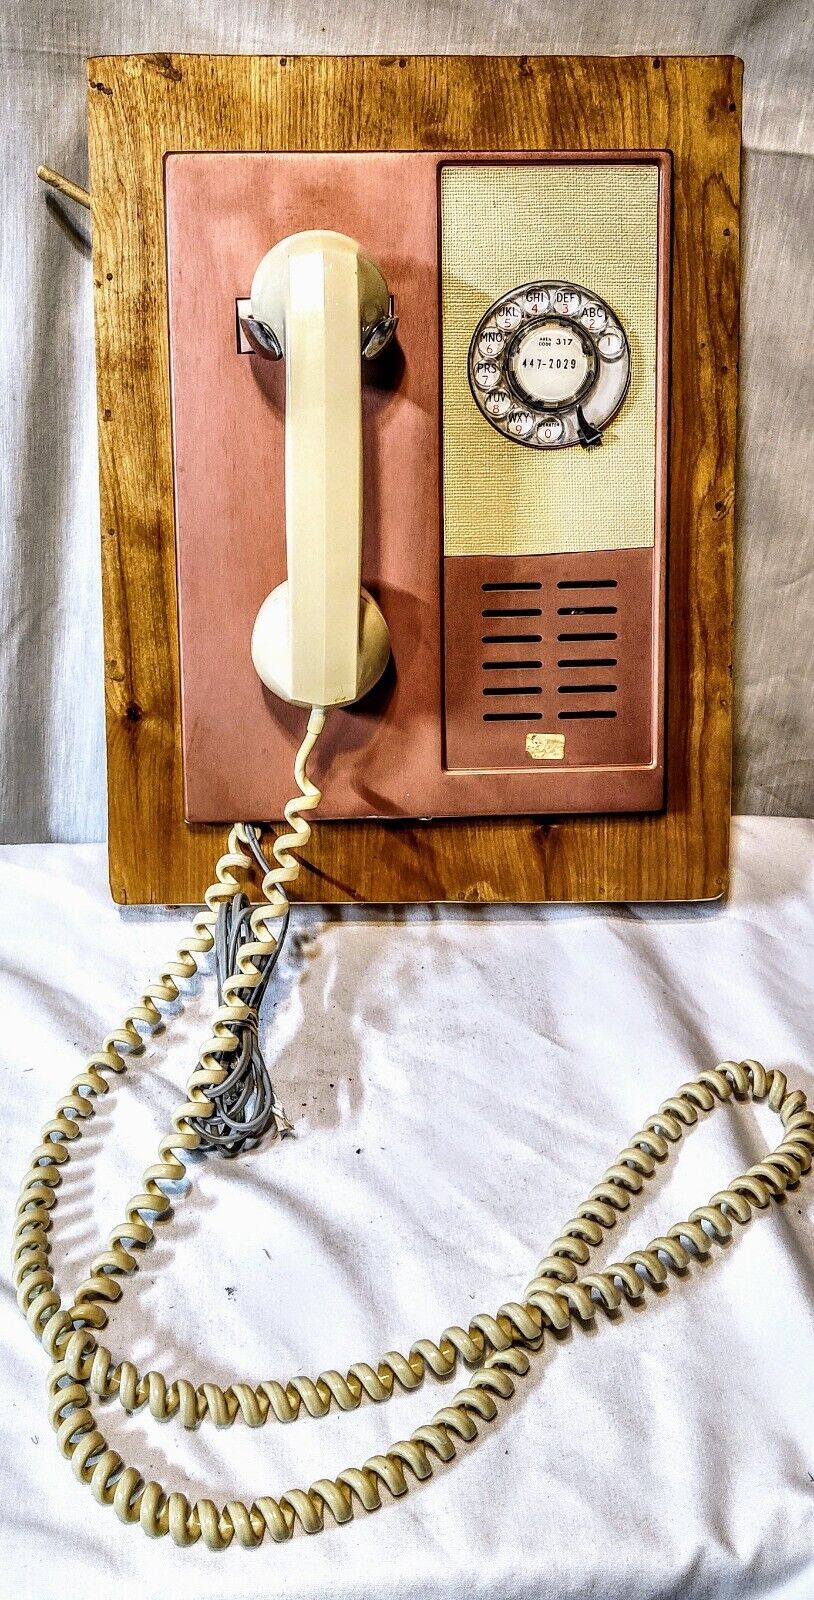 Vintage Automatic Electric Landline Rotary Panel Phone Model No. 95